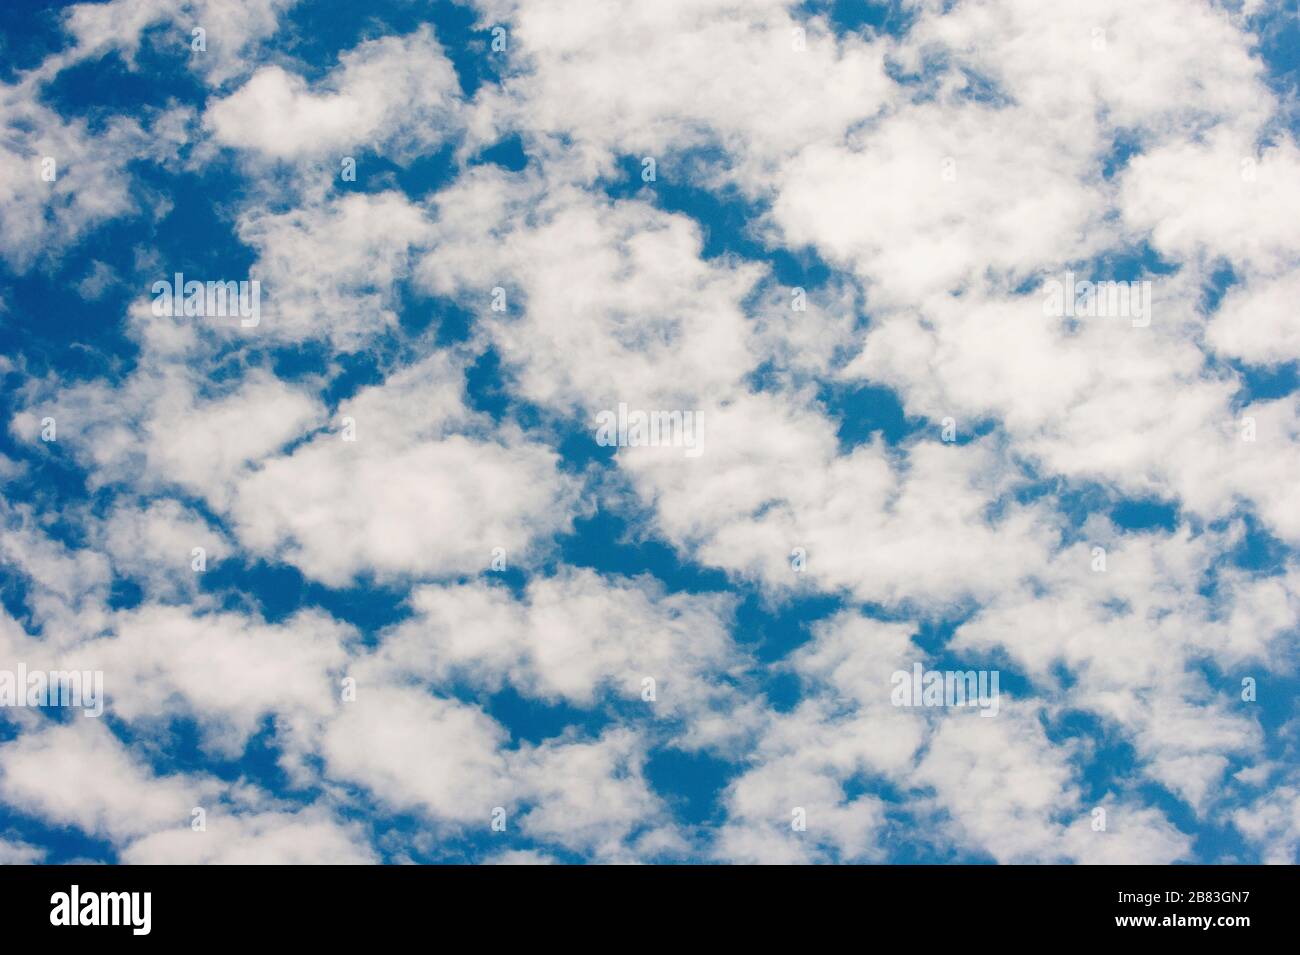 Cloud pattern against blue sky Stock Photo